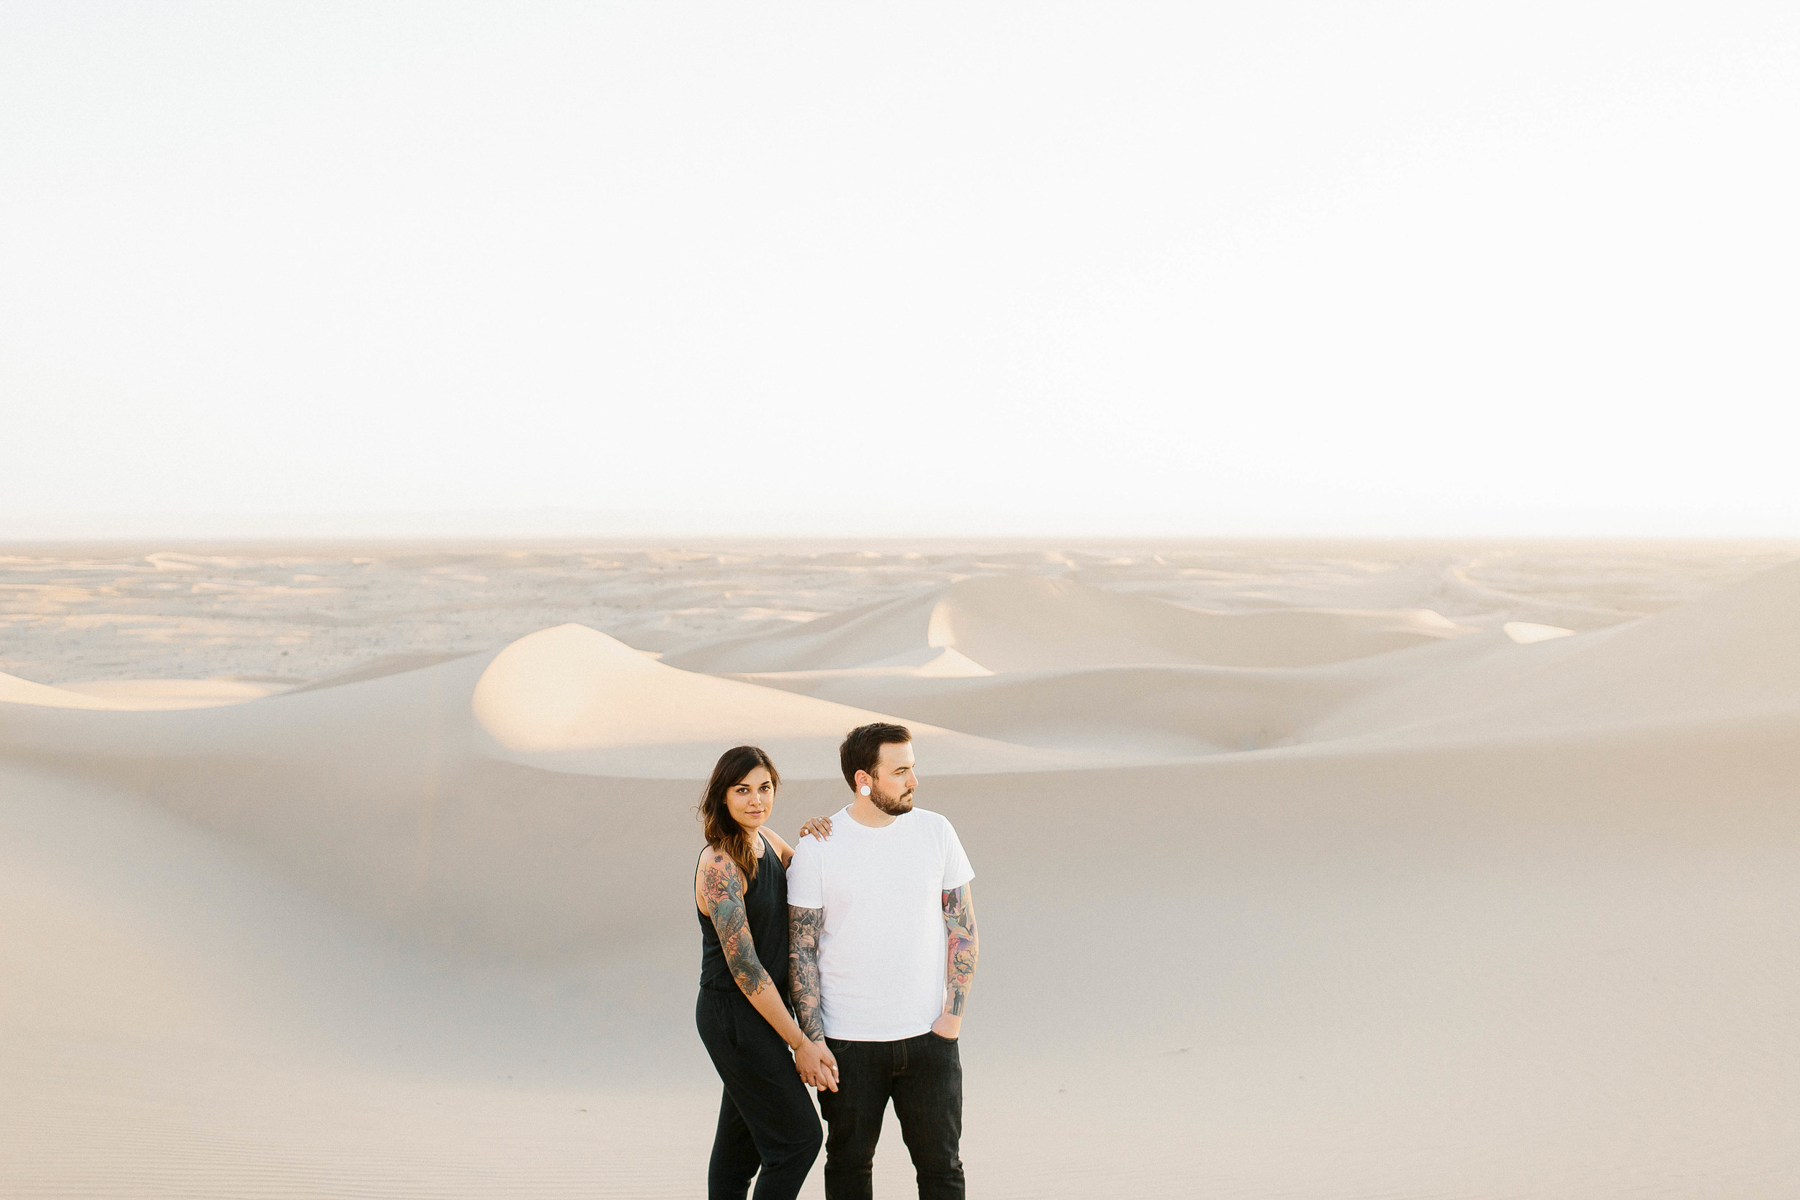 Algodones Sand Dunes Film Engagement Photography